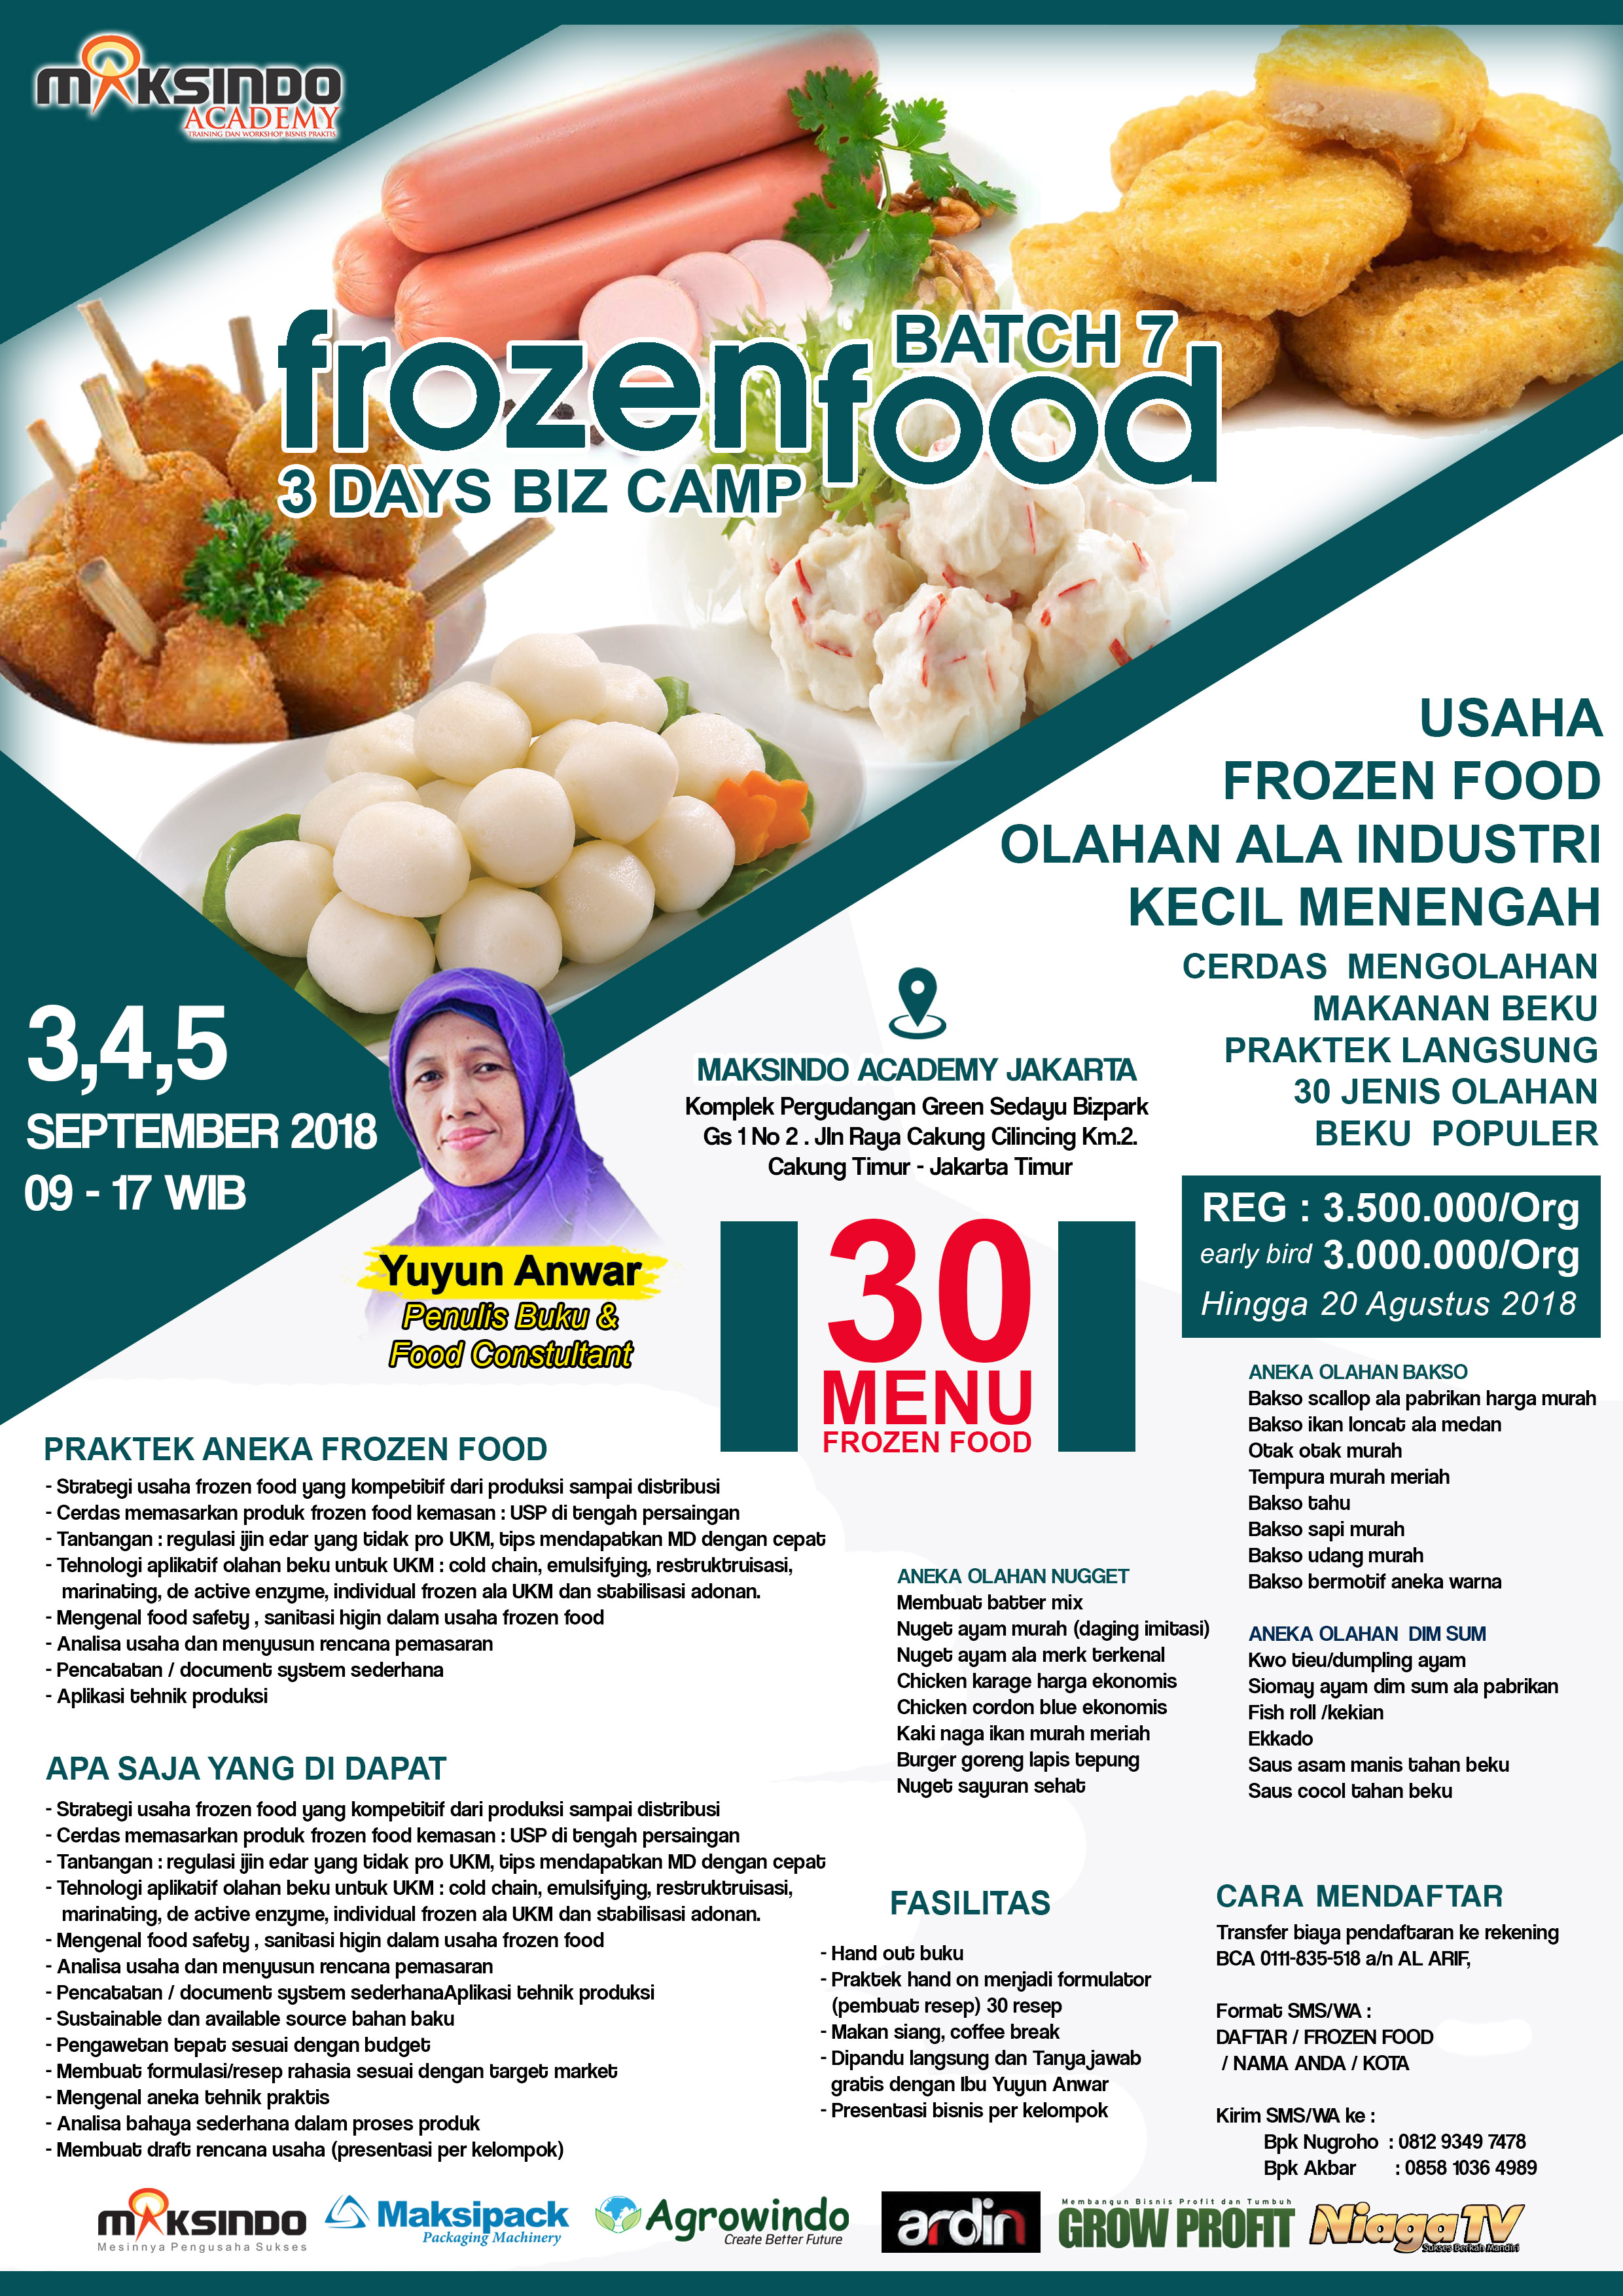 Training Usaha Frozen Food, 3,4, dan 5 September 2018